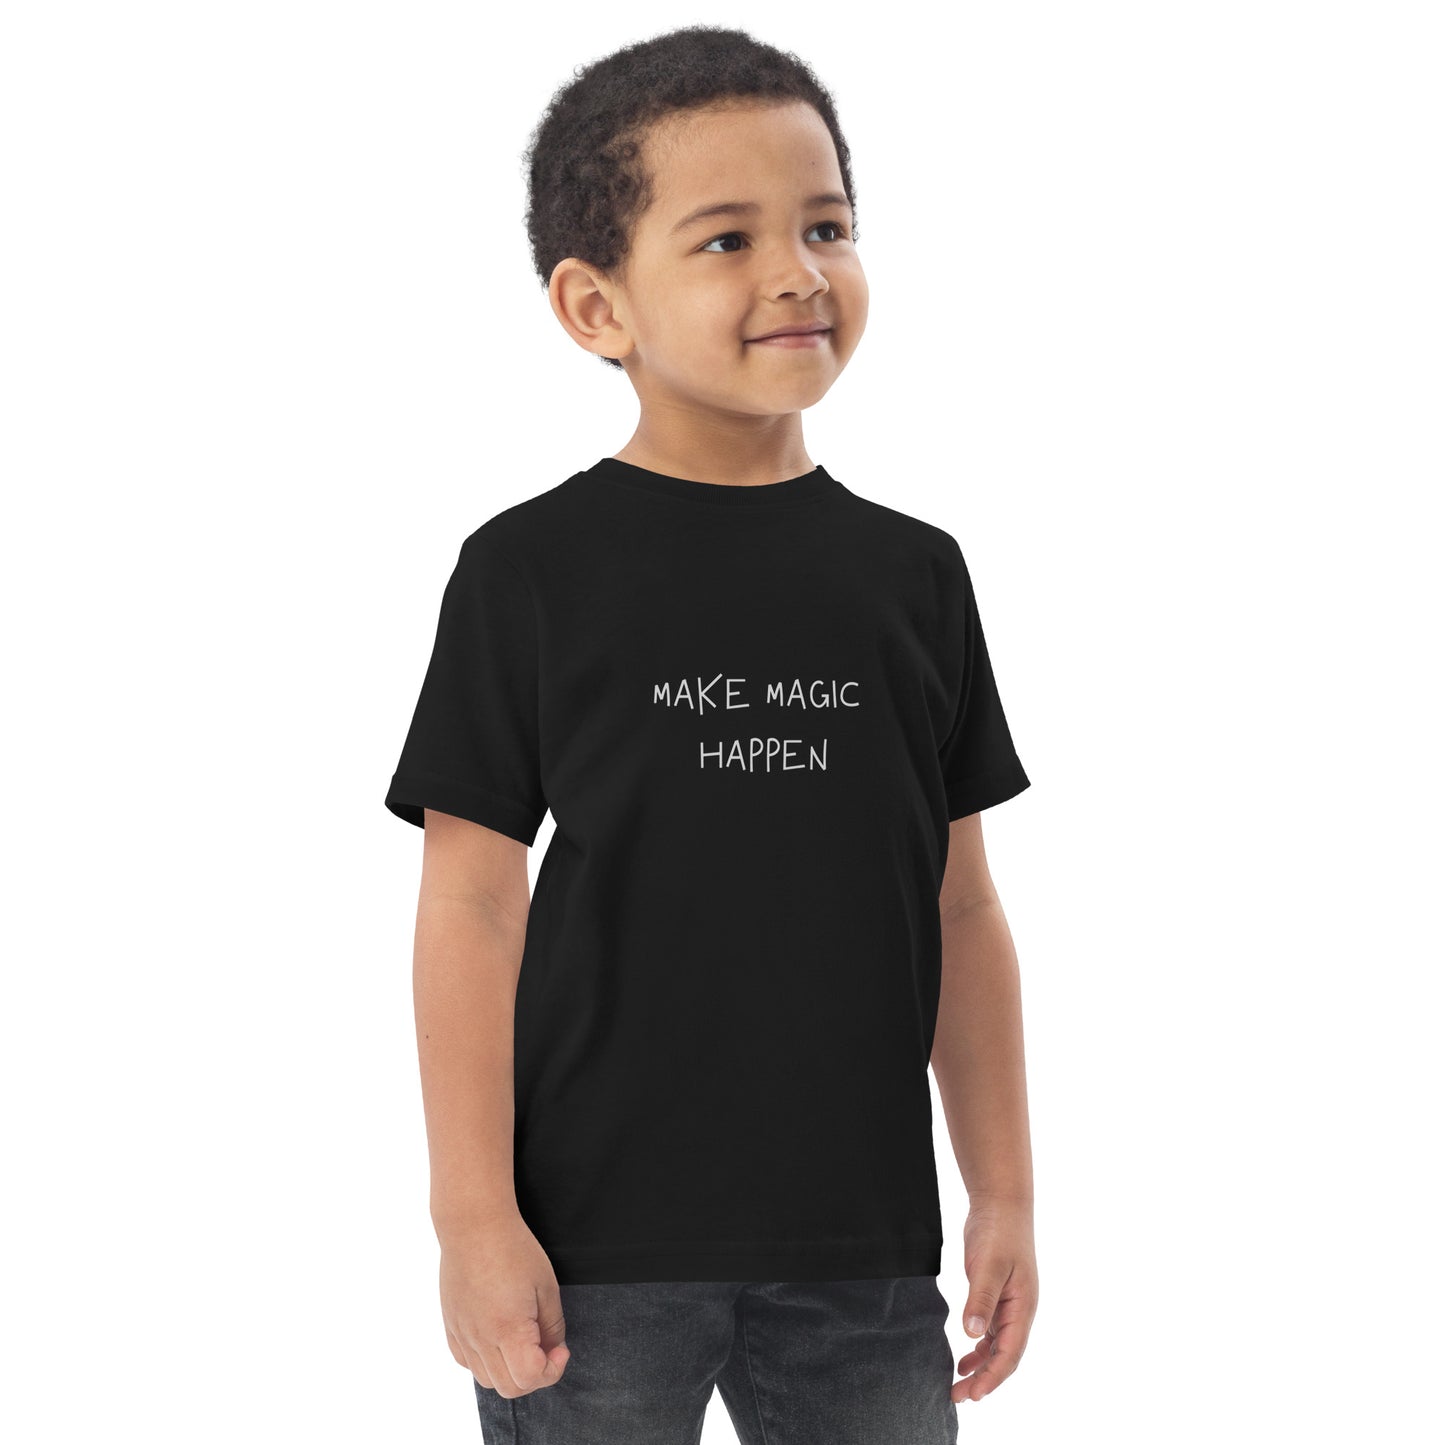 Toddler jersey t-shirt - MAKE MAGIC HAPPEN